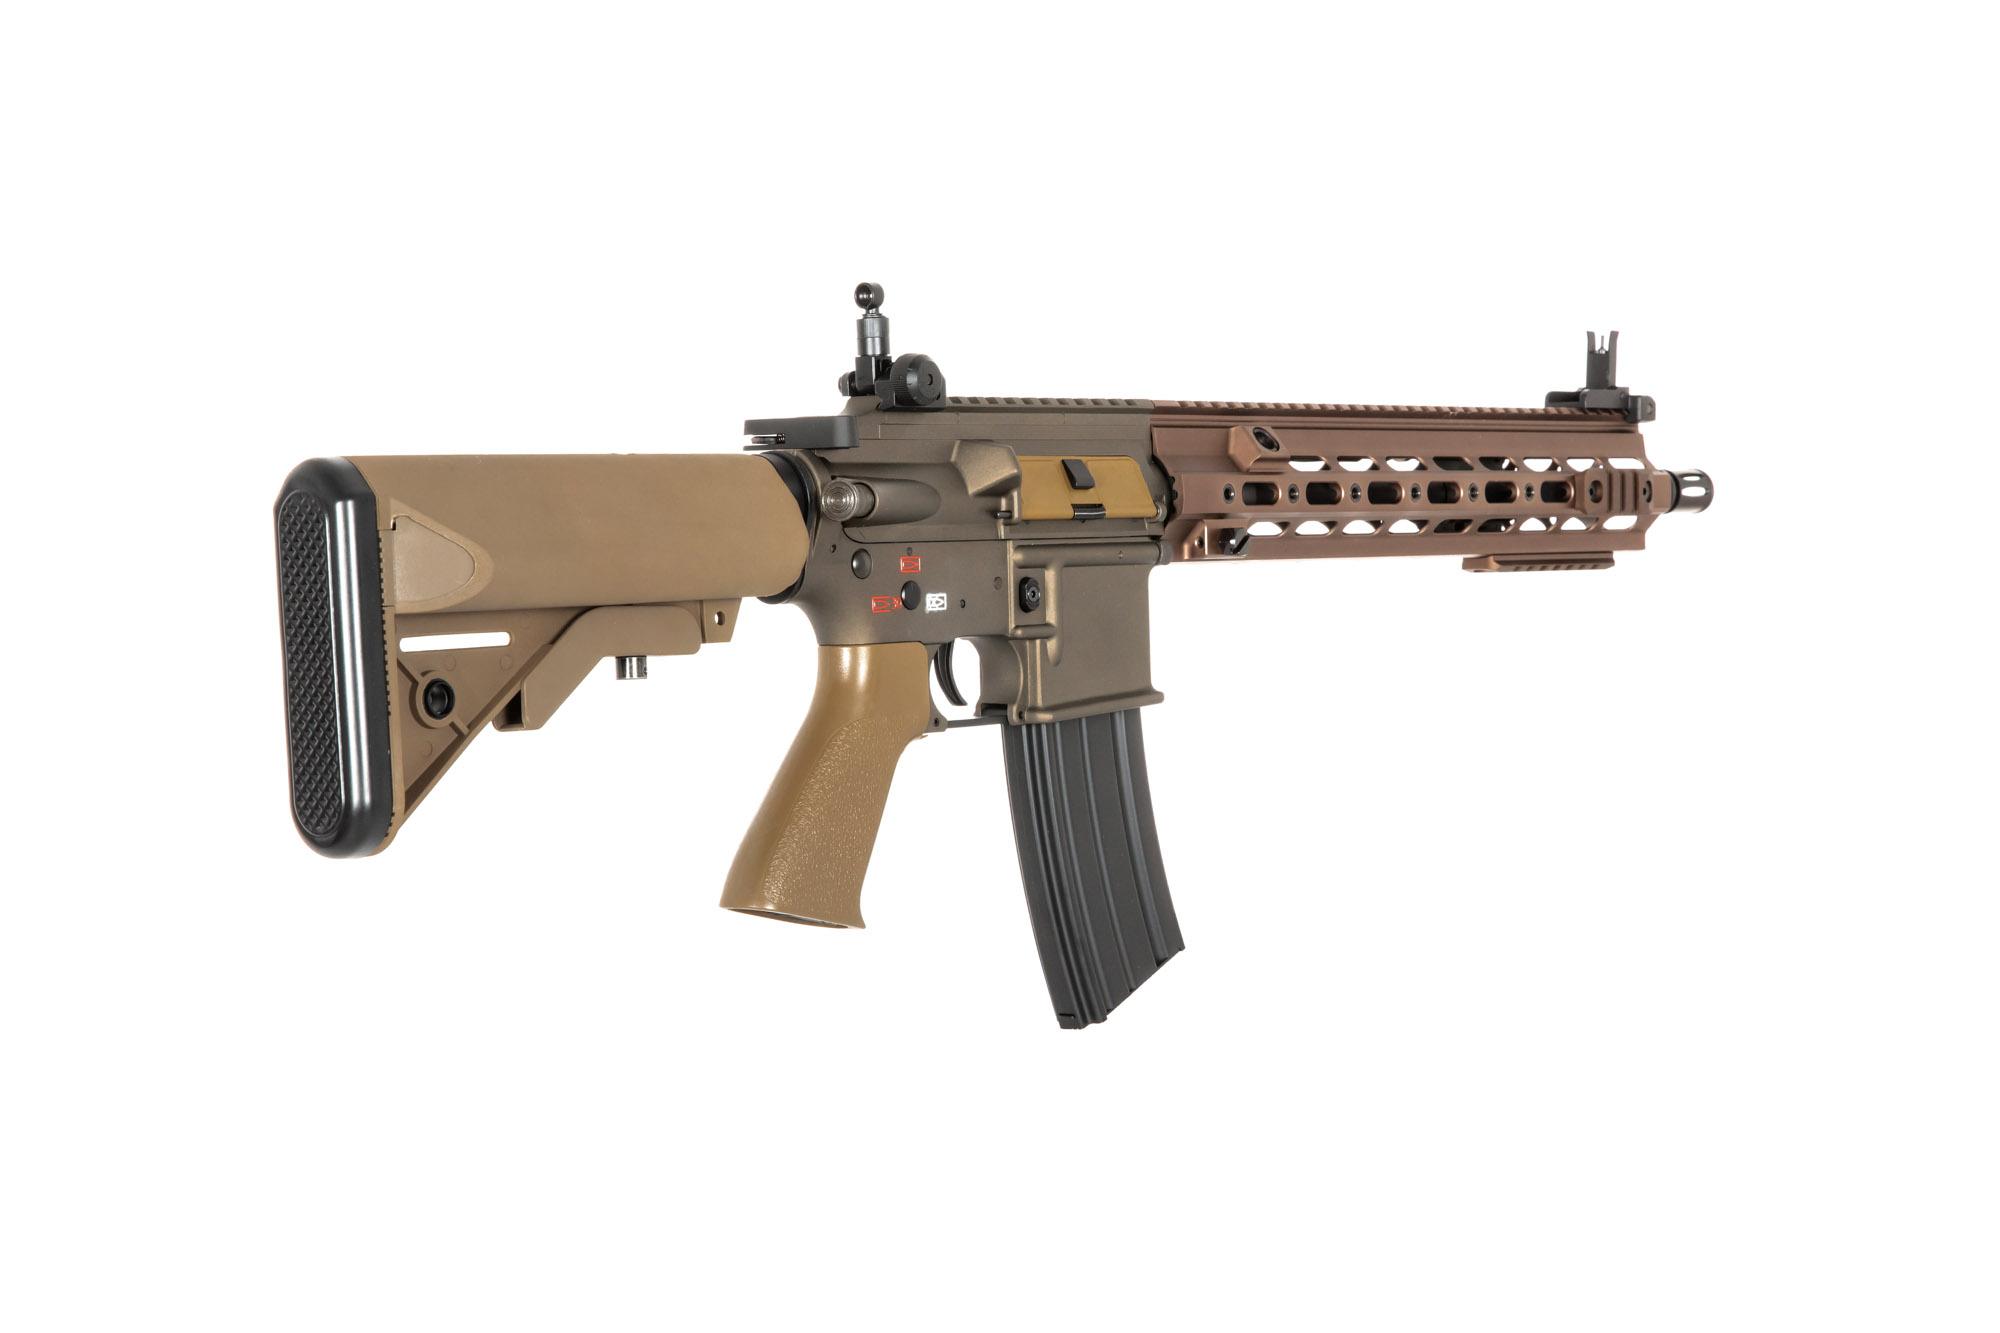 HK416A5 812S Carbine Replica - tan